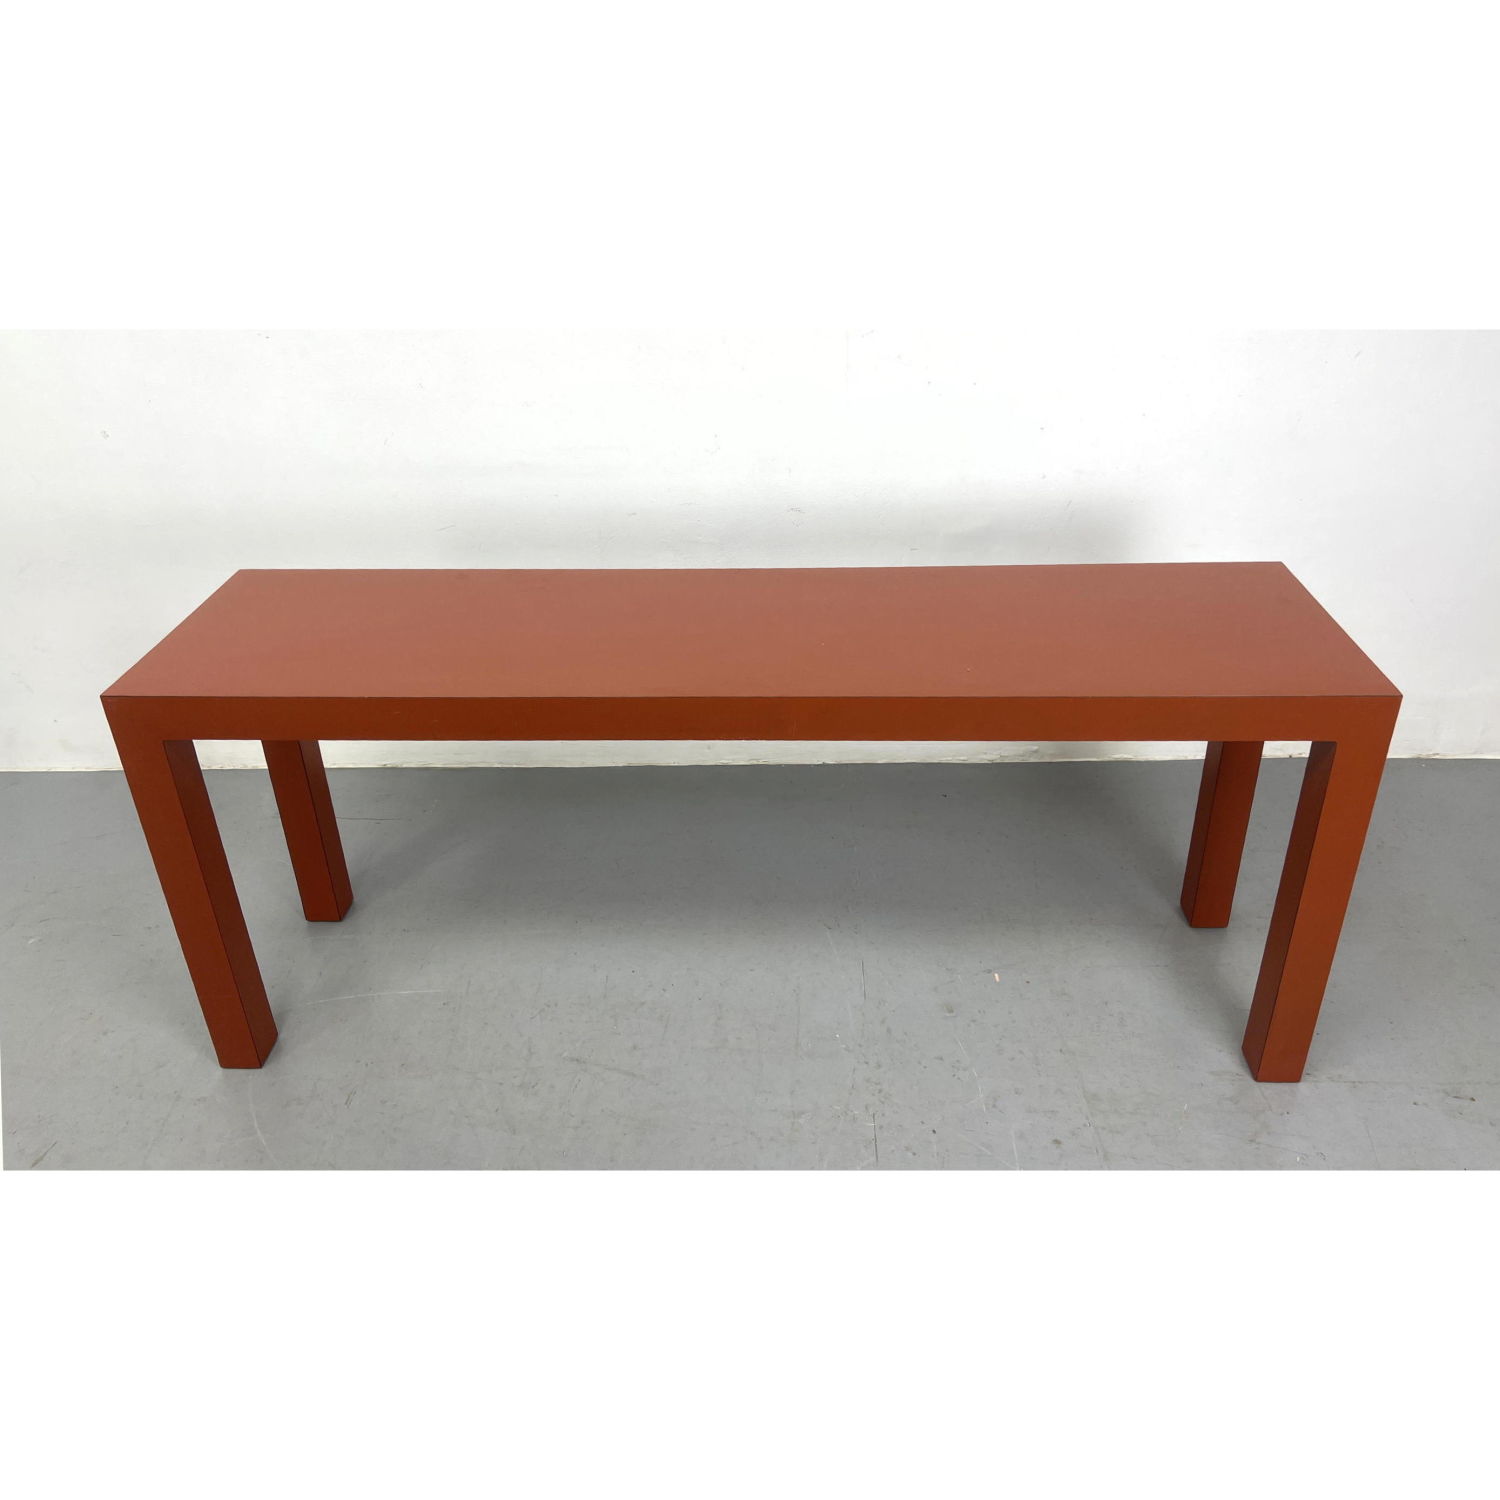 Rust color laminate parsons table  3ad52d